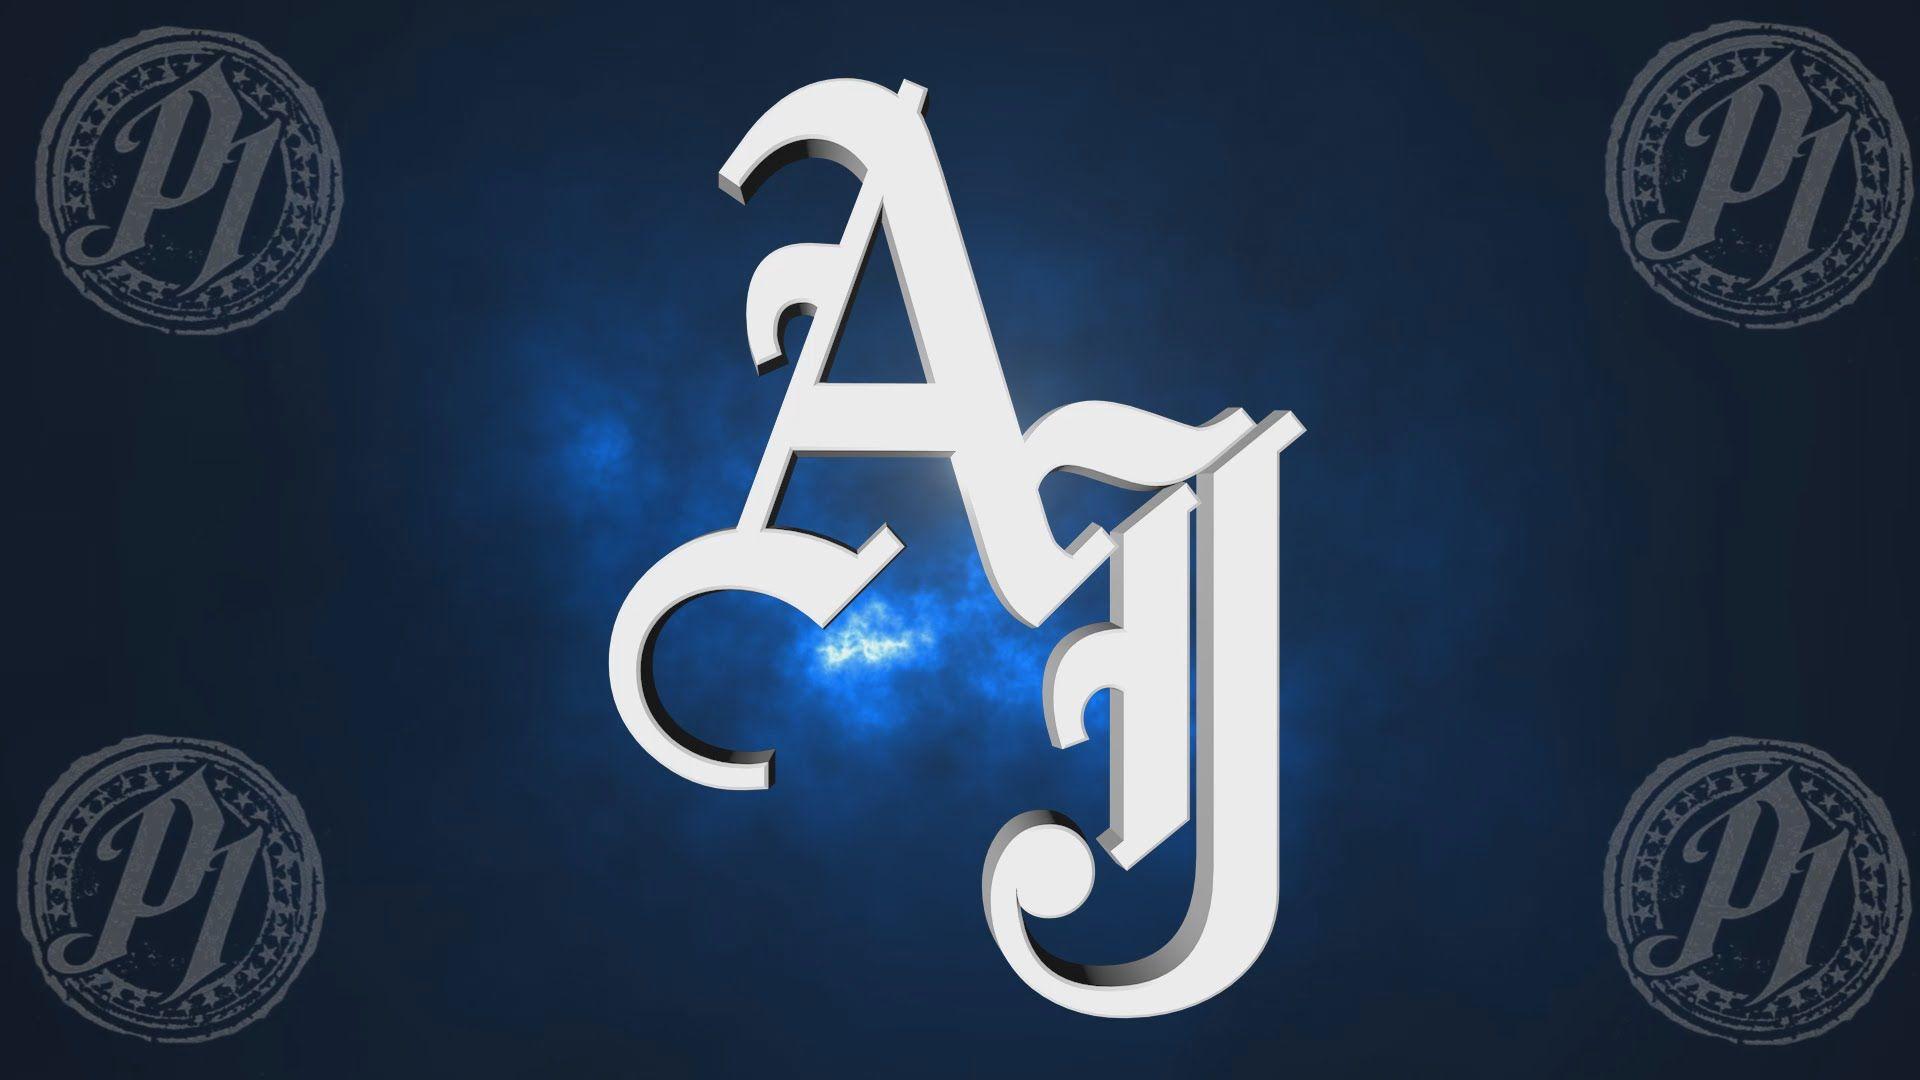 AJ Styles Logo Wallpapers - Wallpaper Cave